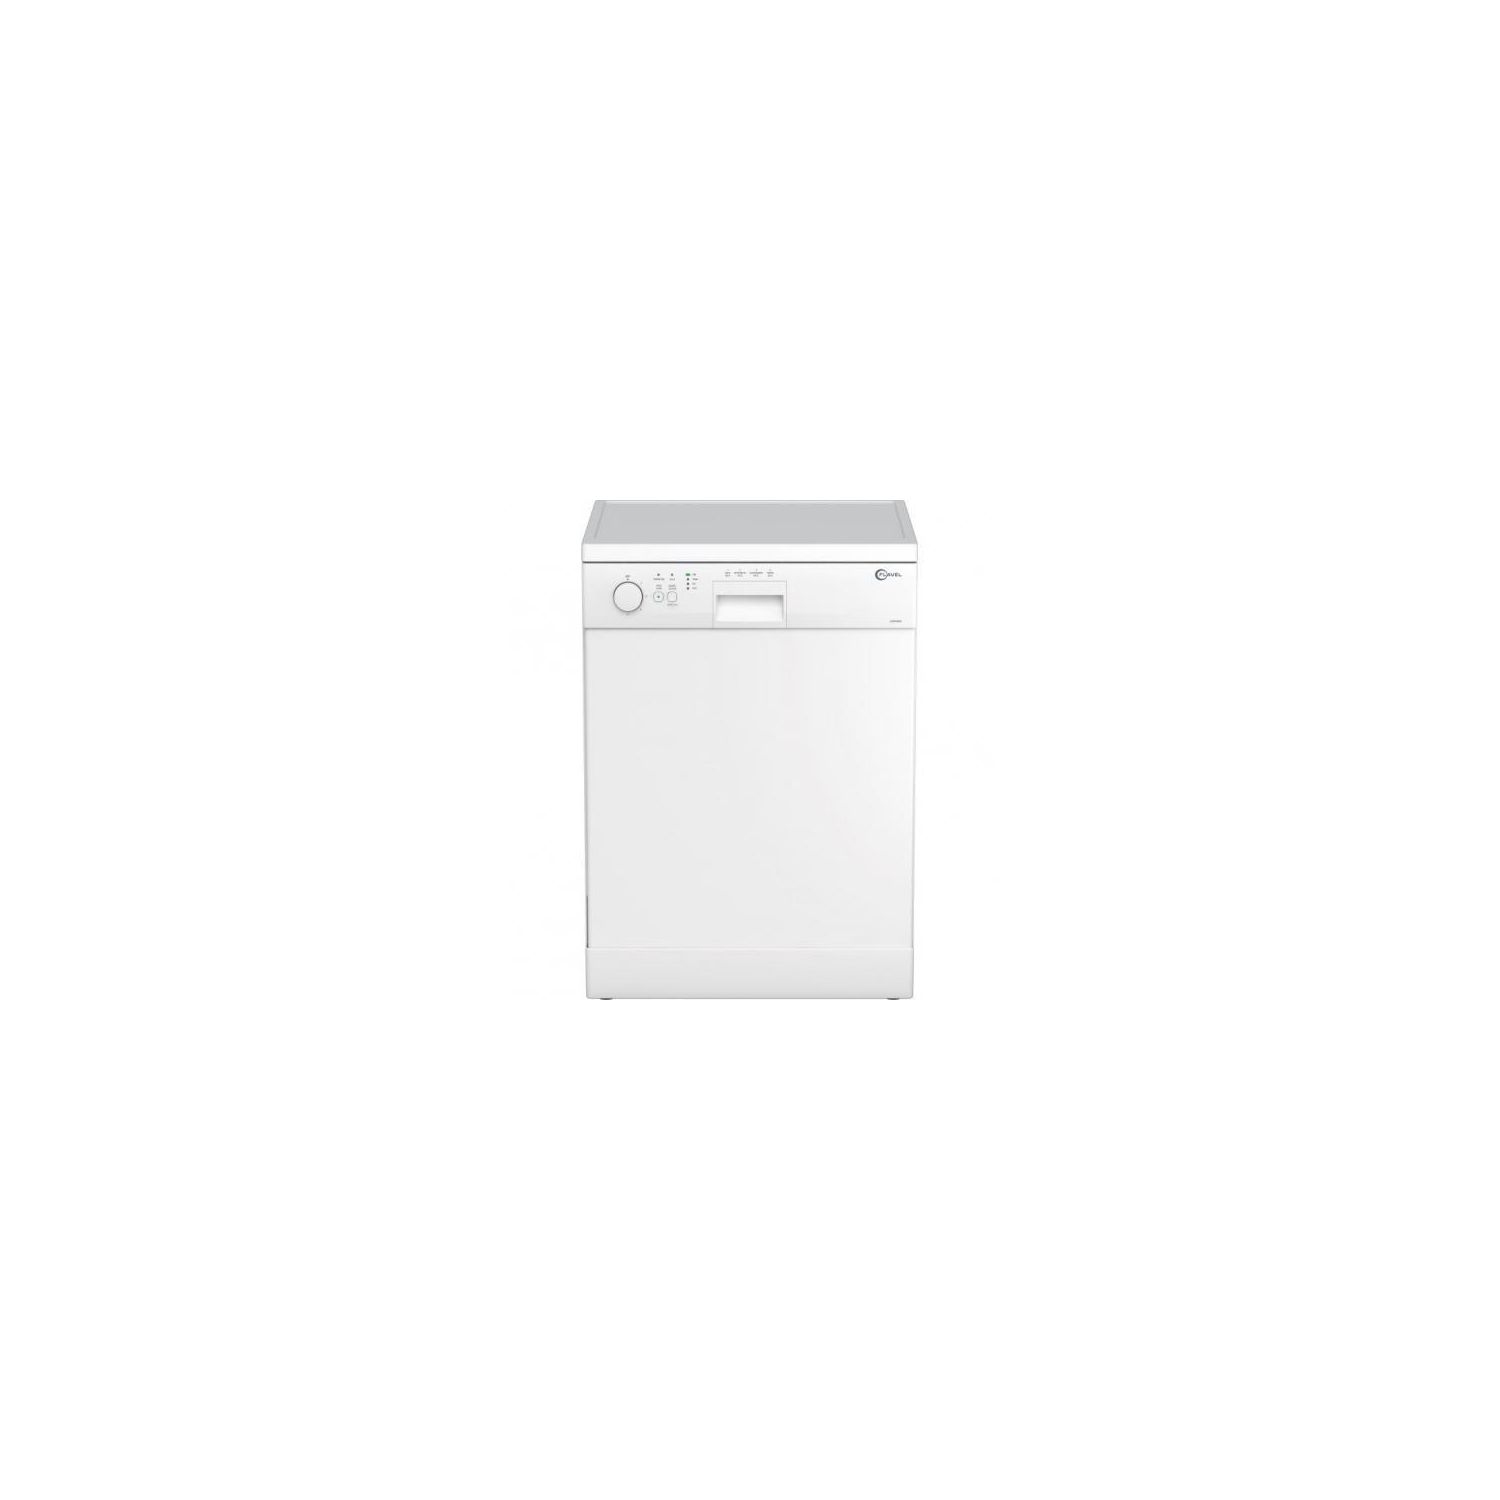 Flavel DWF644W 60cm Dishwasher White - 0